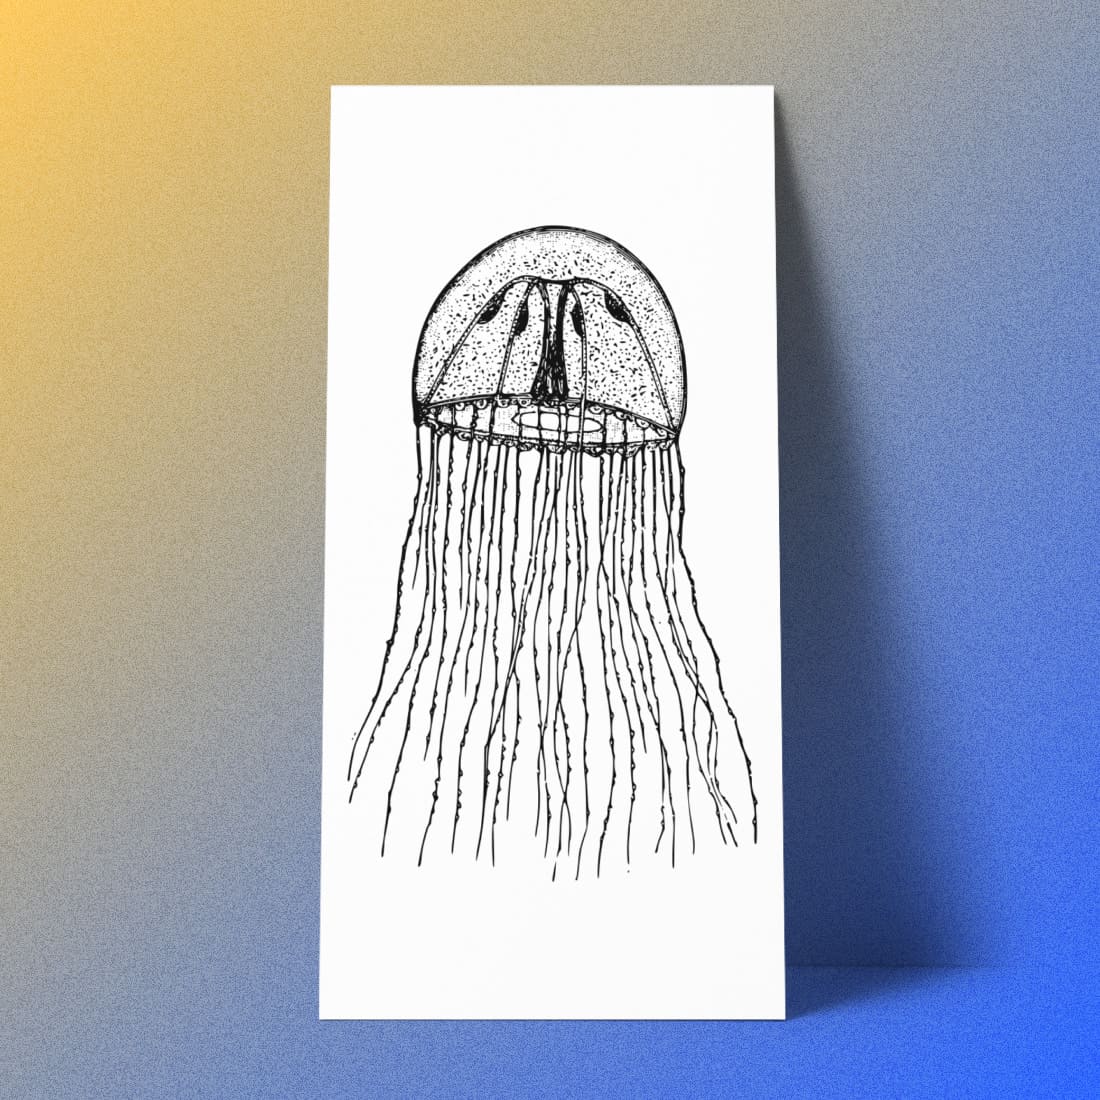 Animal Jellyfish Ocean Medusa on the Paper.